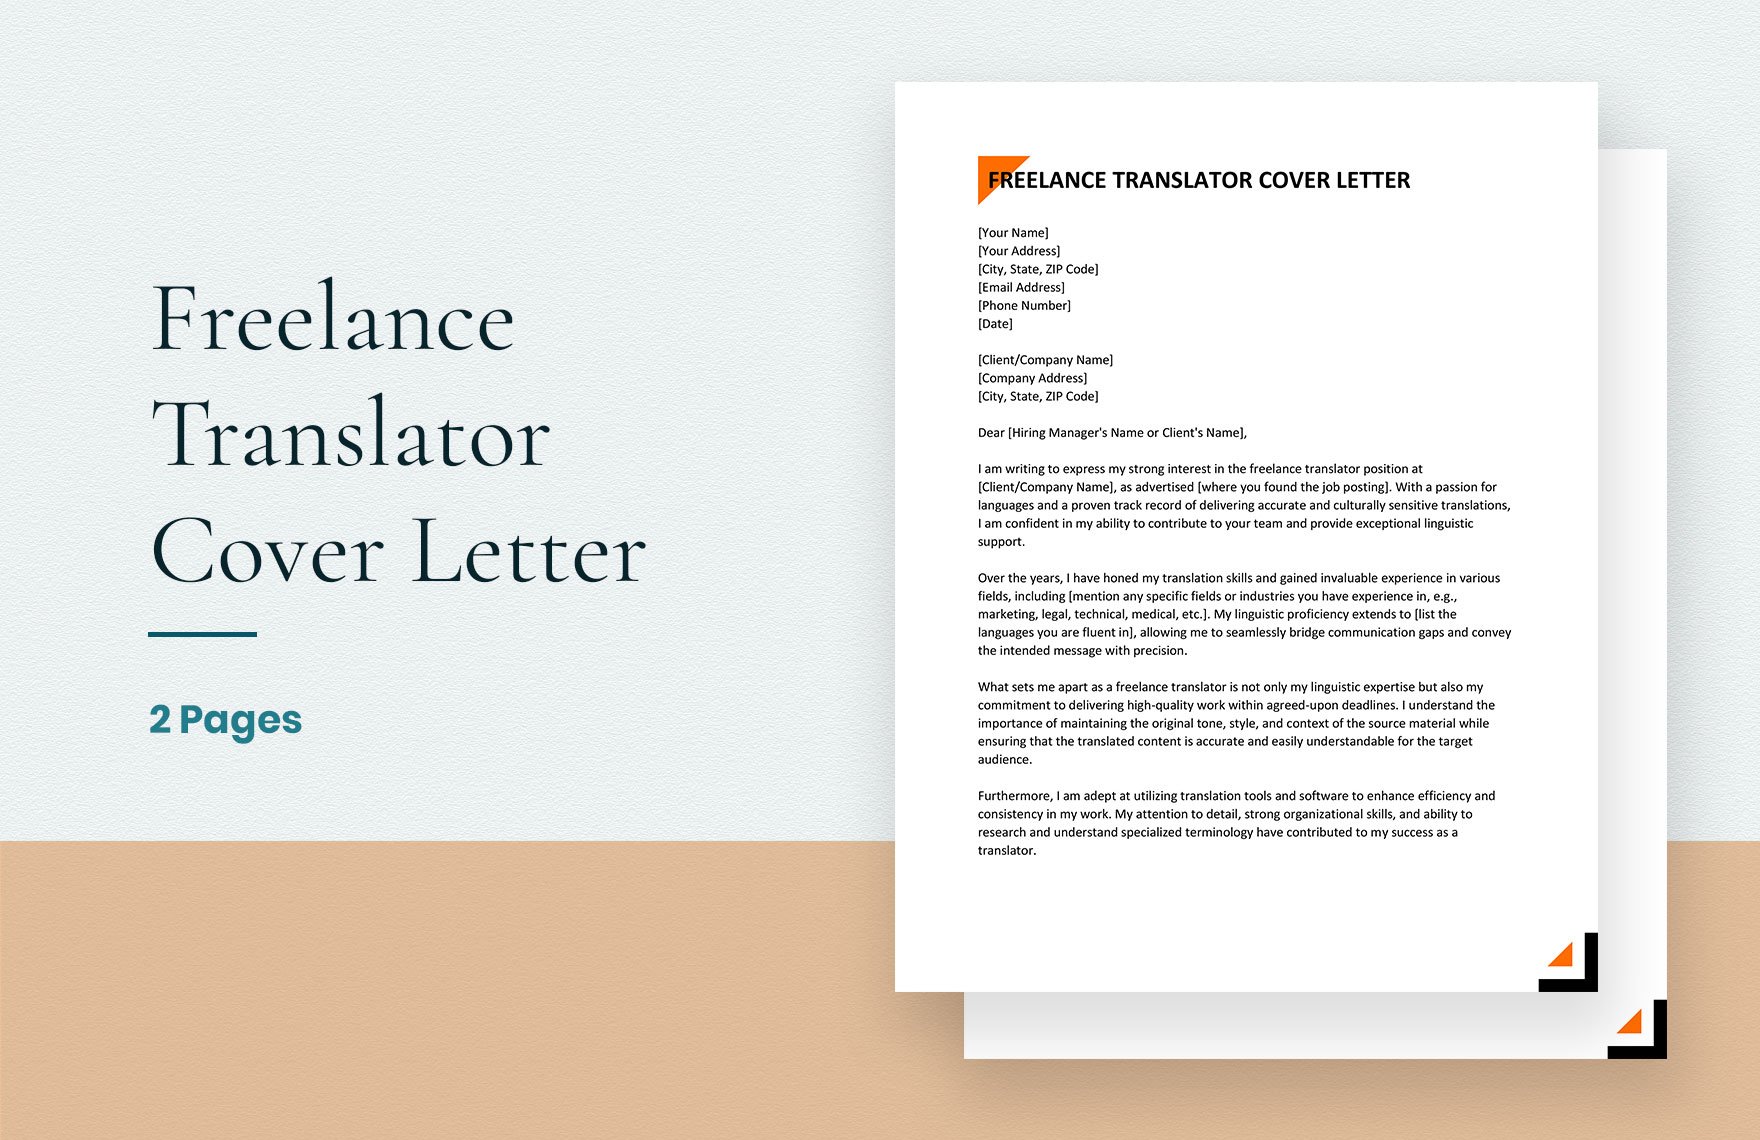 Freelance Translator Cover Letter in Word, Google Docs, Apple Pages